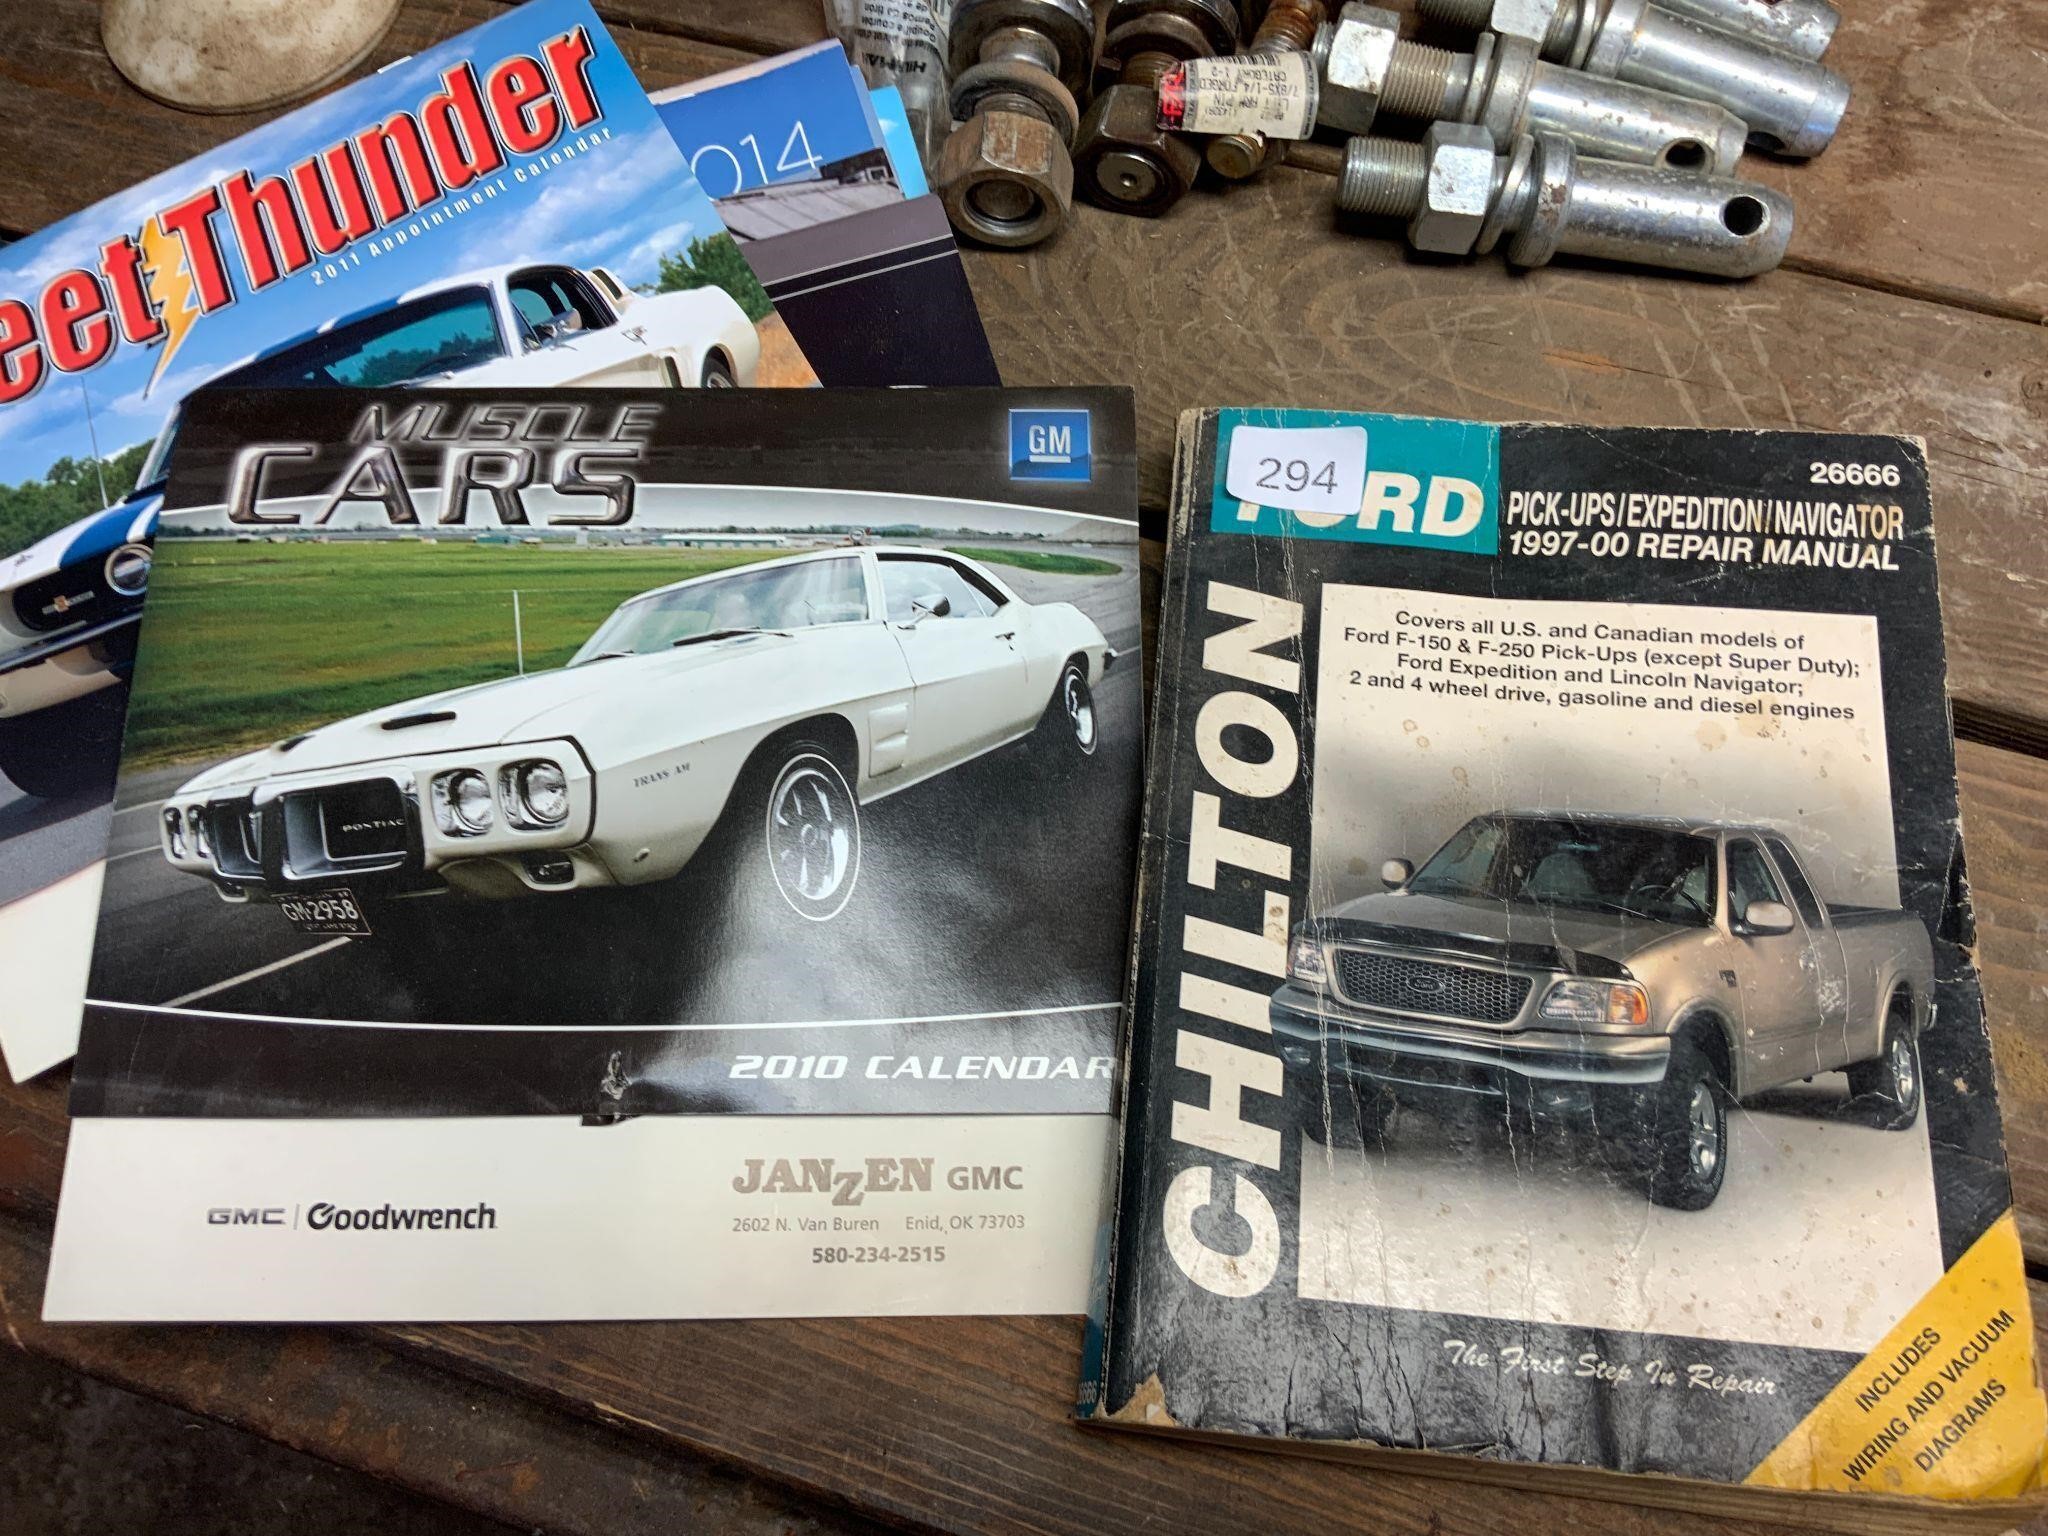 Chilton Ford Manual & 12 Muscle Car Calendars